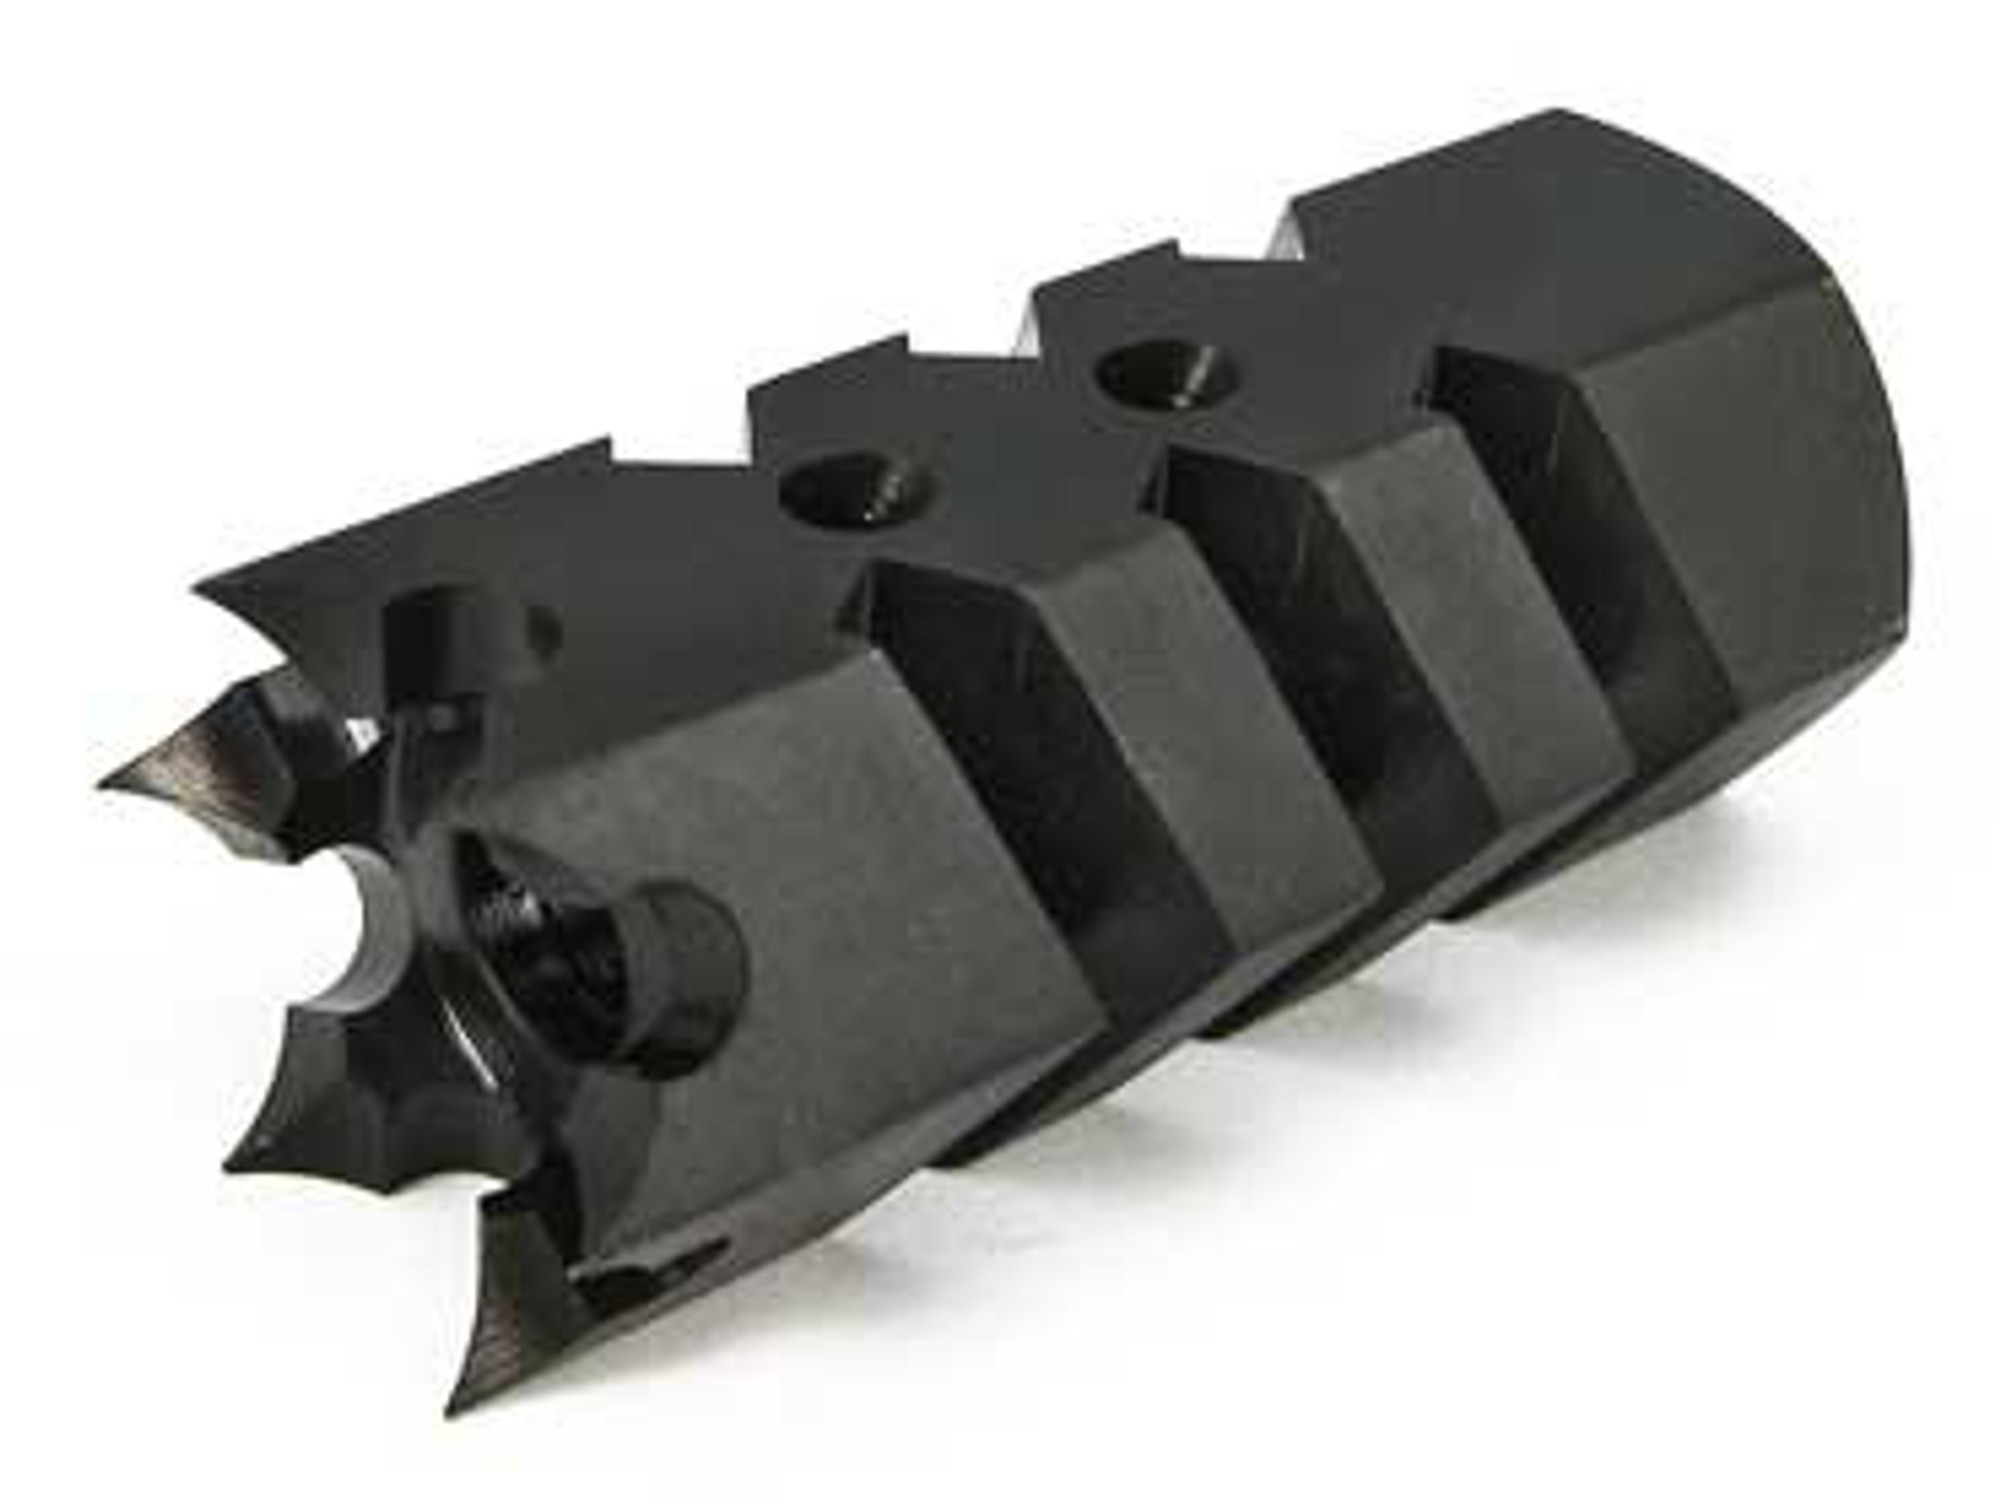 Airsoft Shark Muzzle Flashhider for Airsoft Guns (14mm Negative)